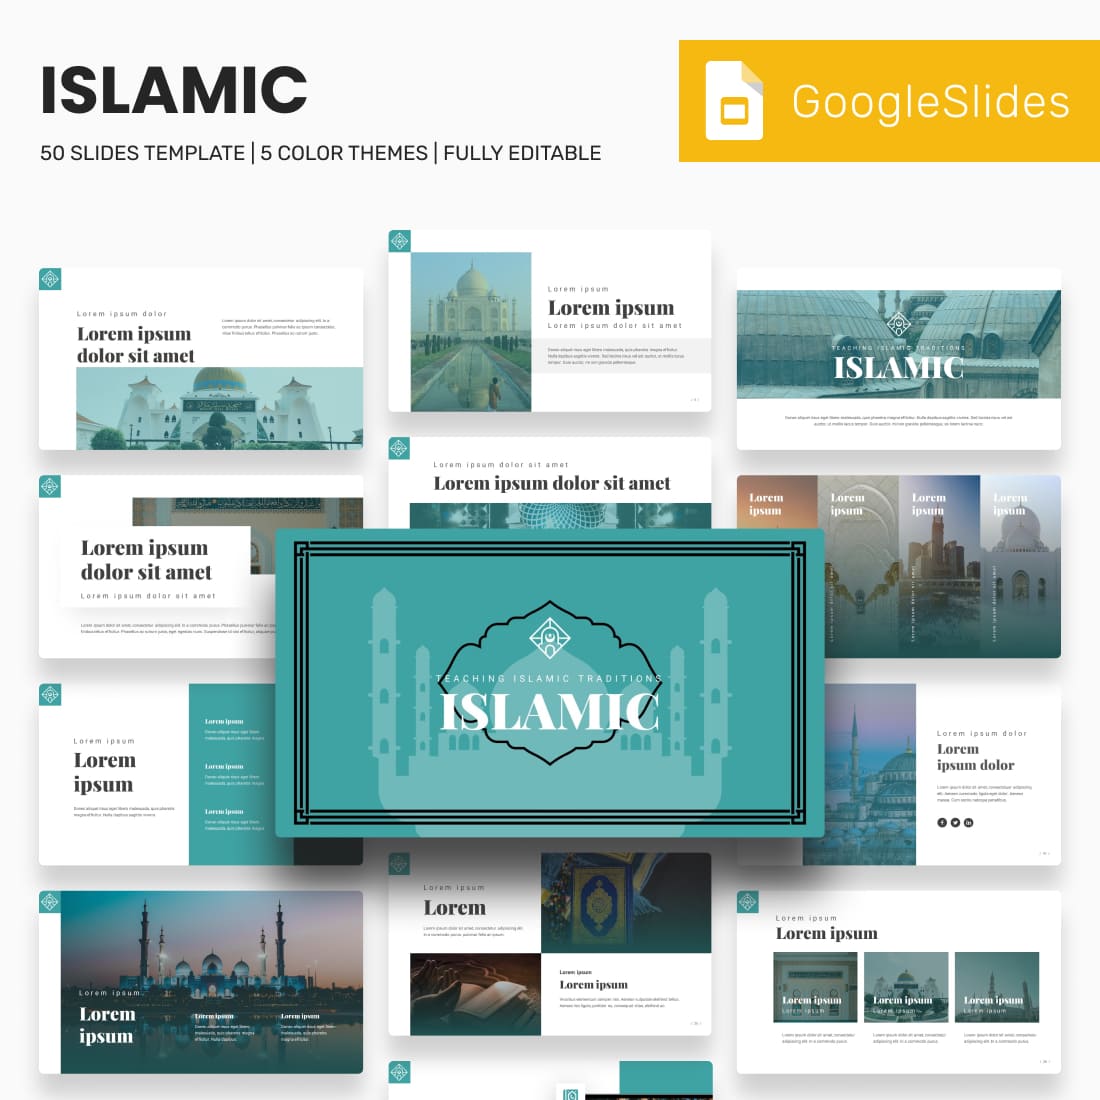 Islamic googleslides template.